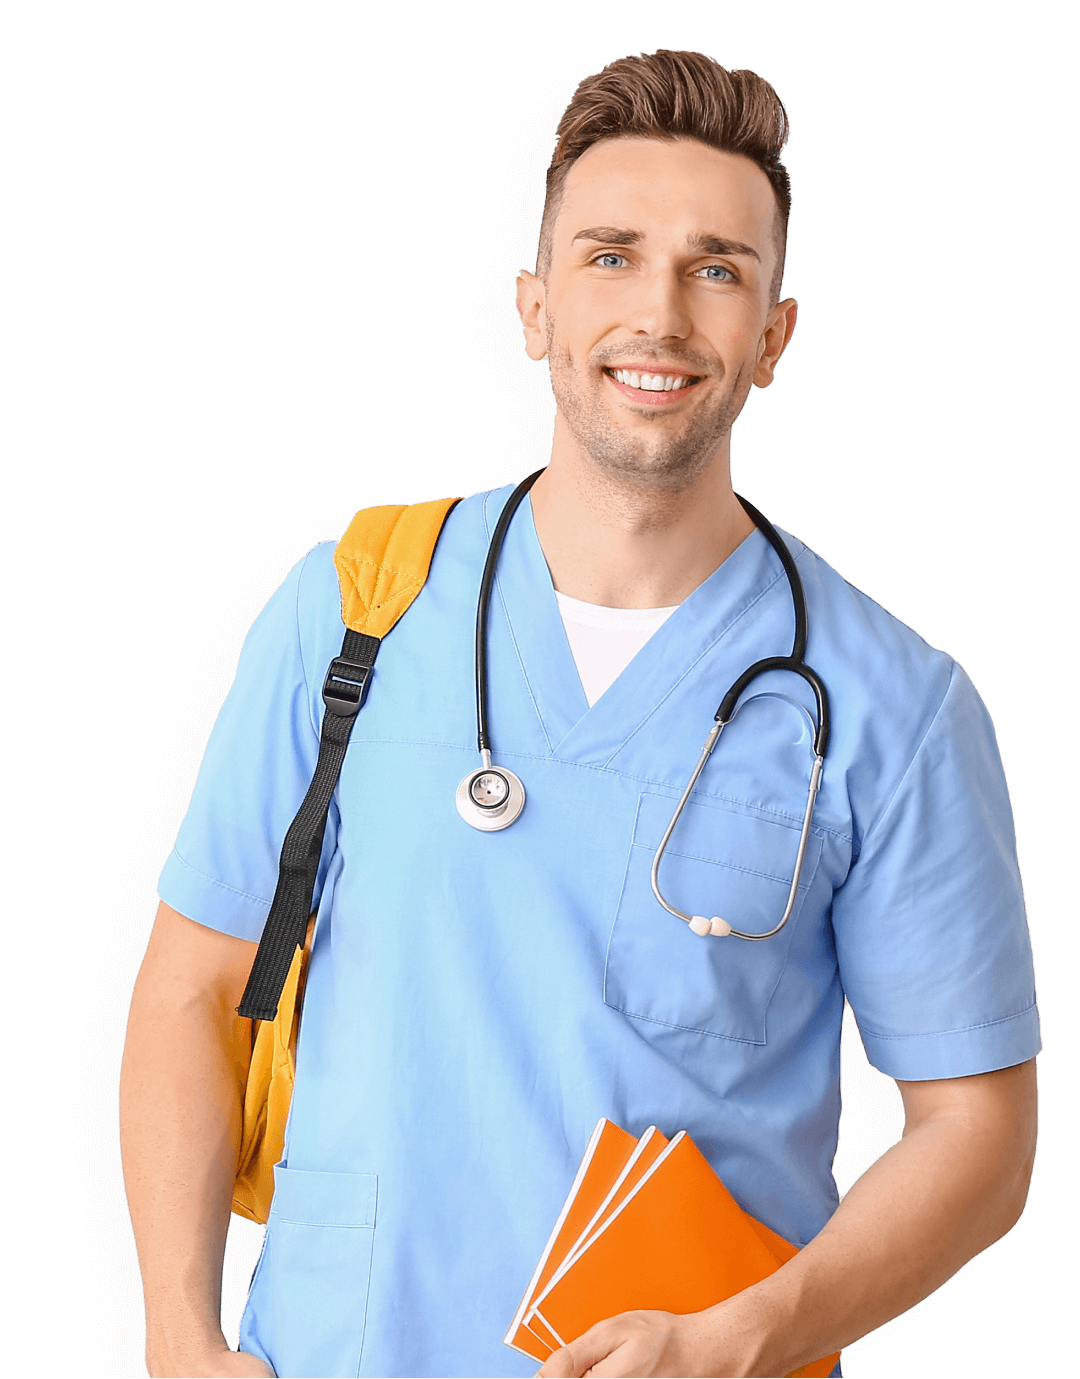 Urology-Medical Student professional